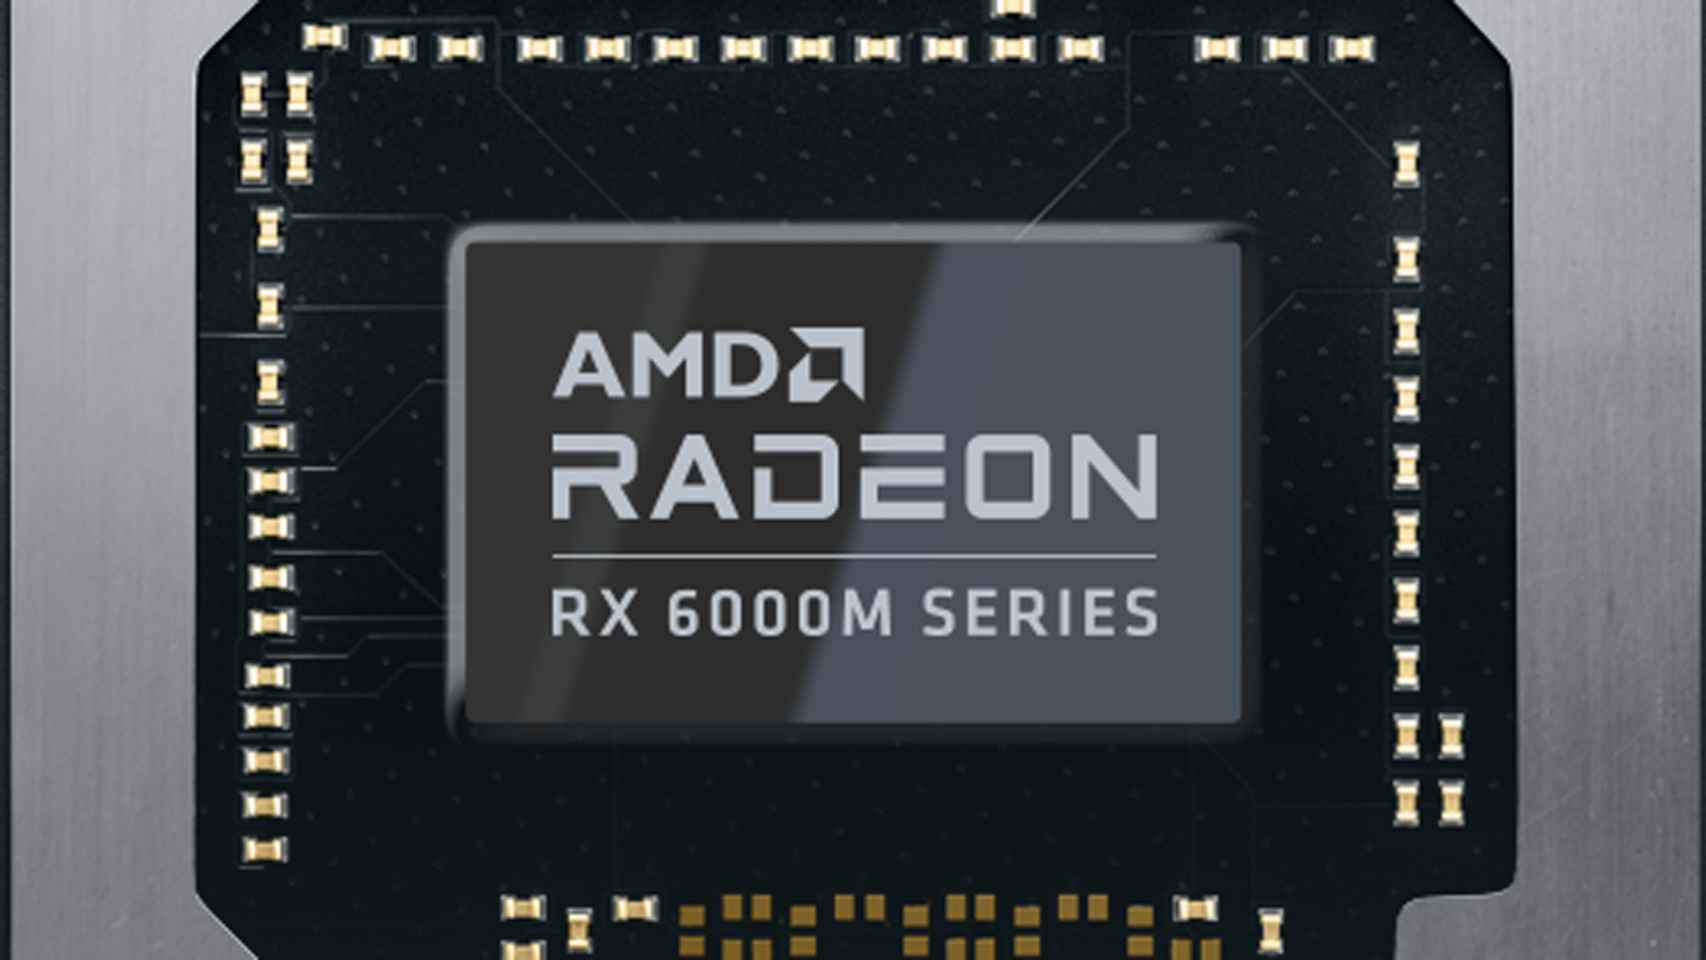 AMD Radeon RX 6000M Series Mobile Graphics.